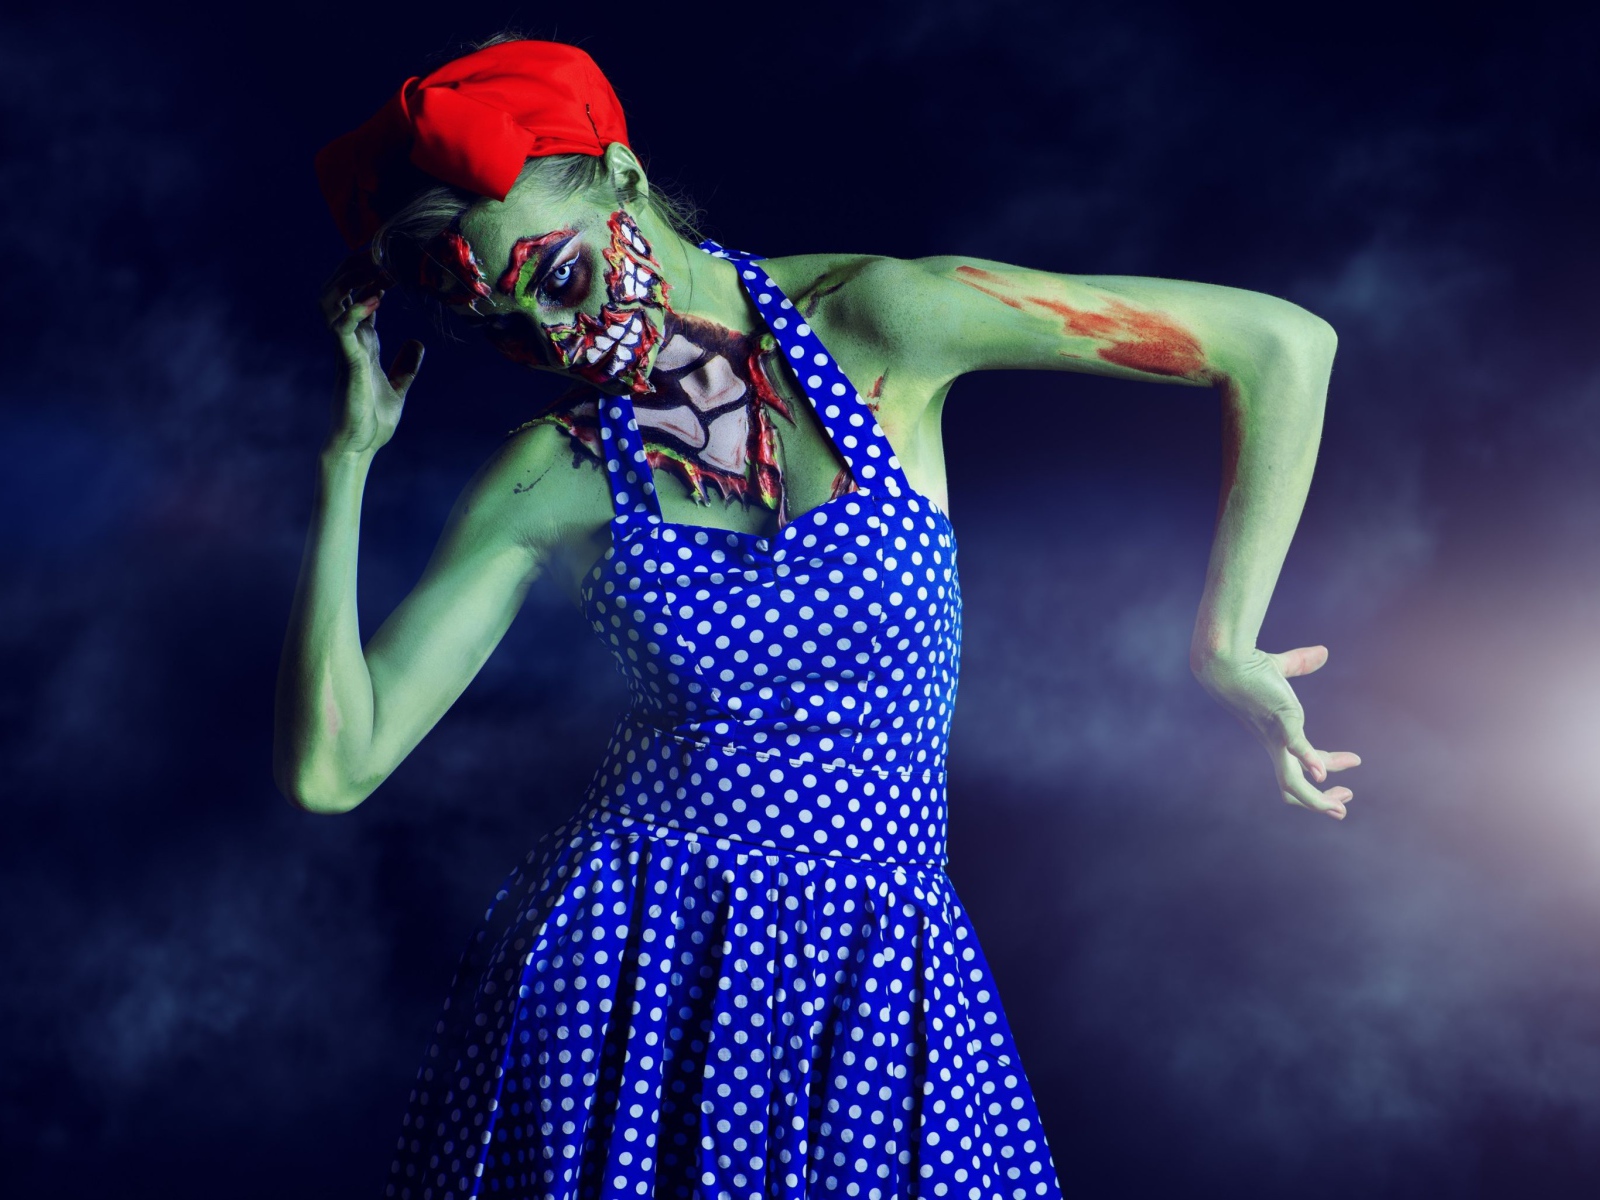 Девушка с гримом зомби на праздник Хэллоуин